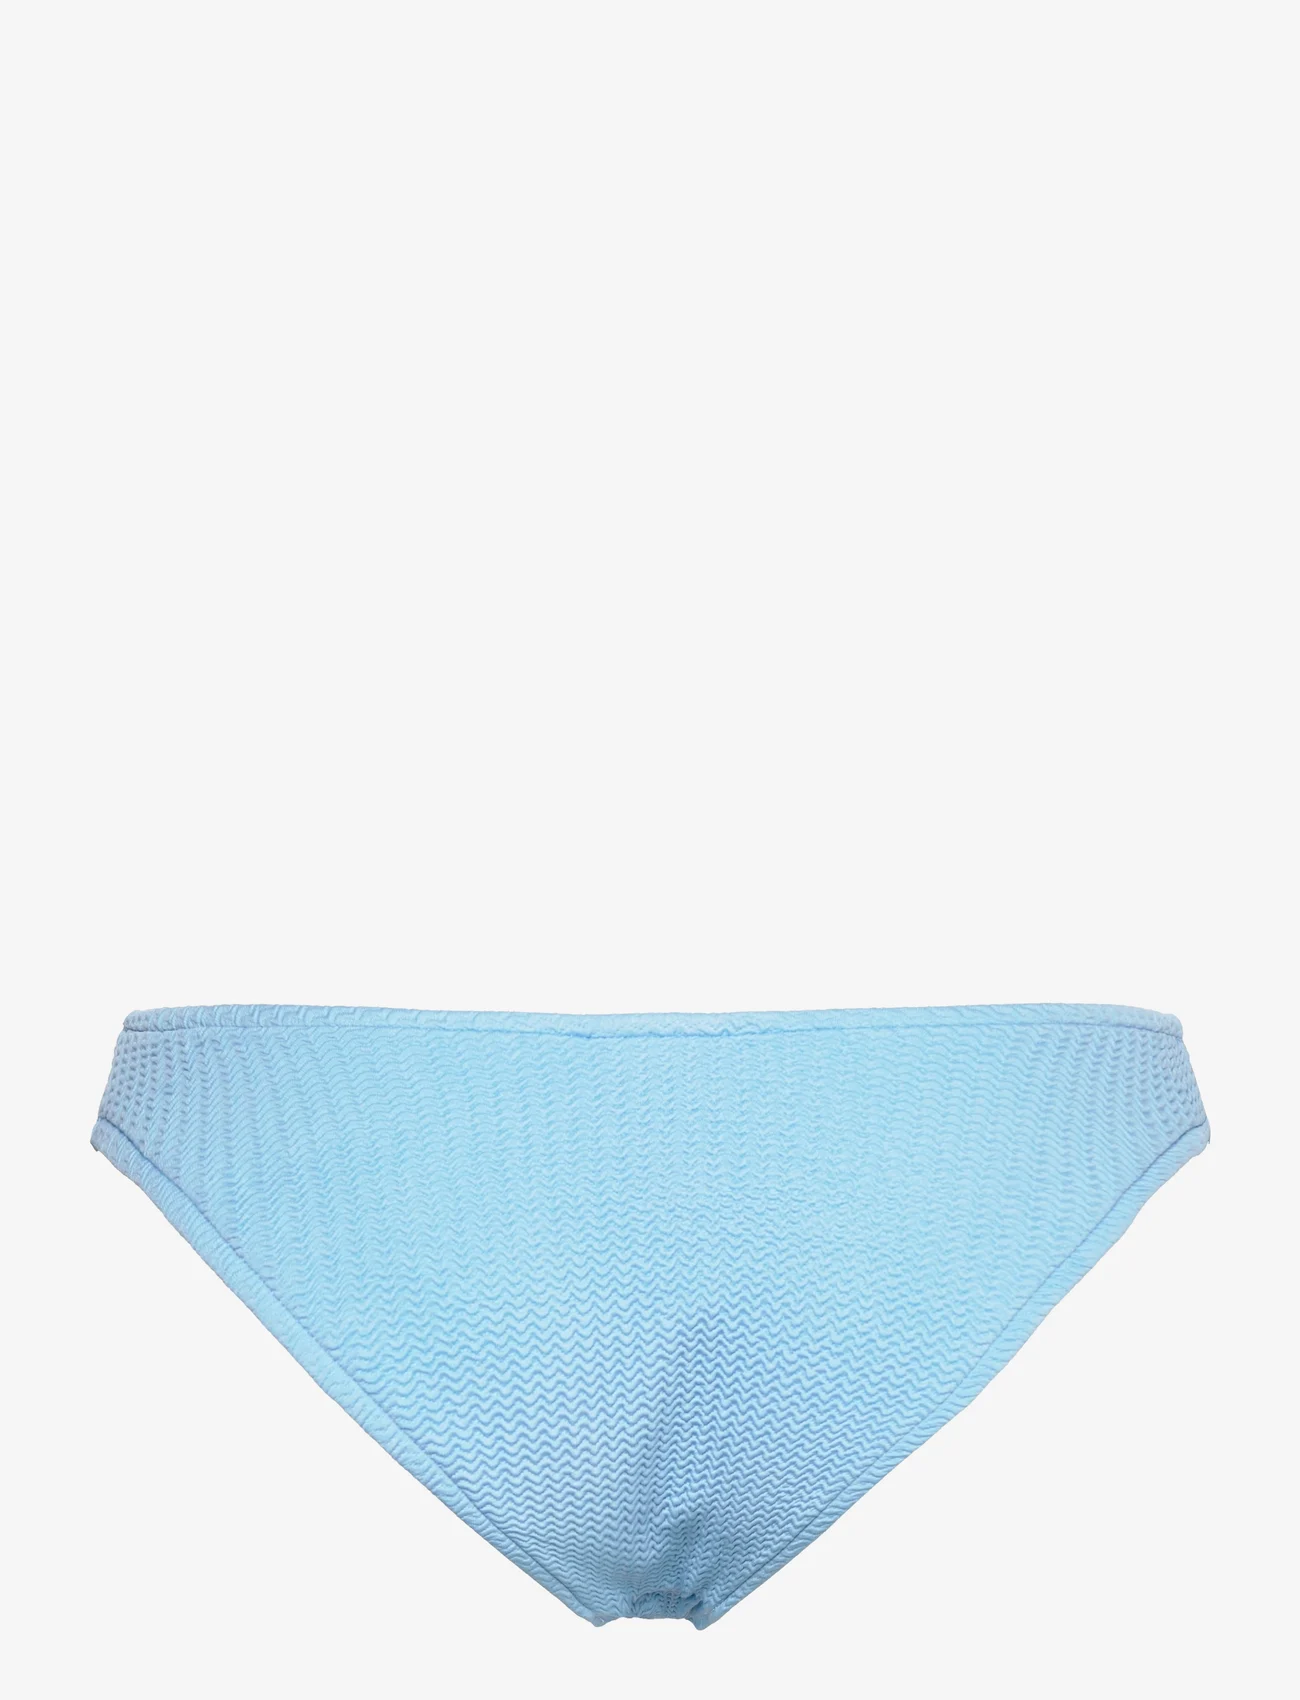 Seafolly - SeaDive High Cut Pant - bikinibriefs - powder blue - 1